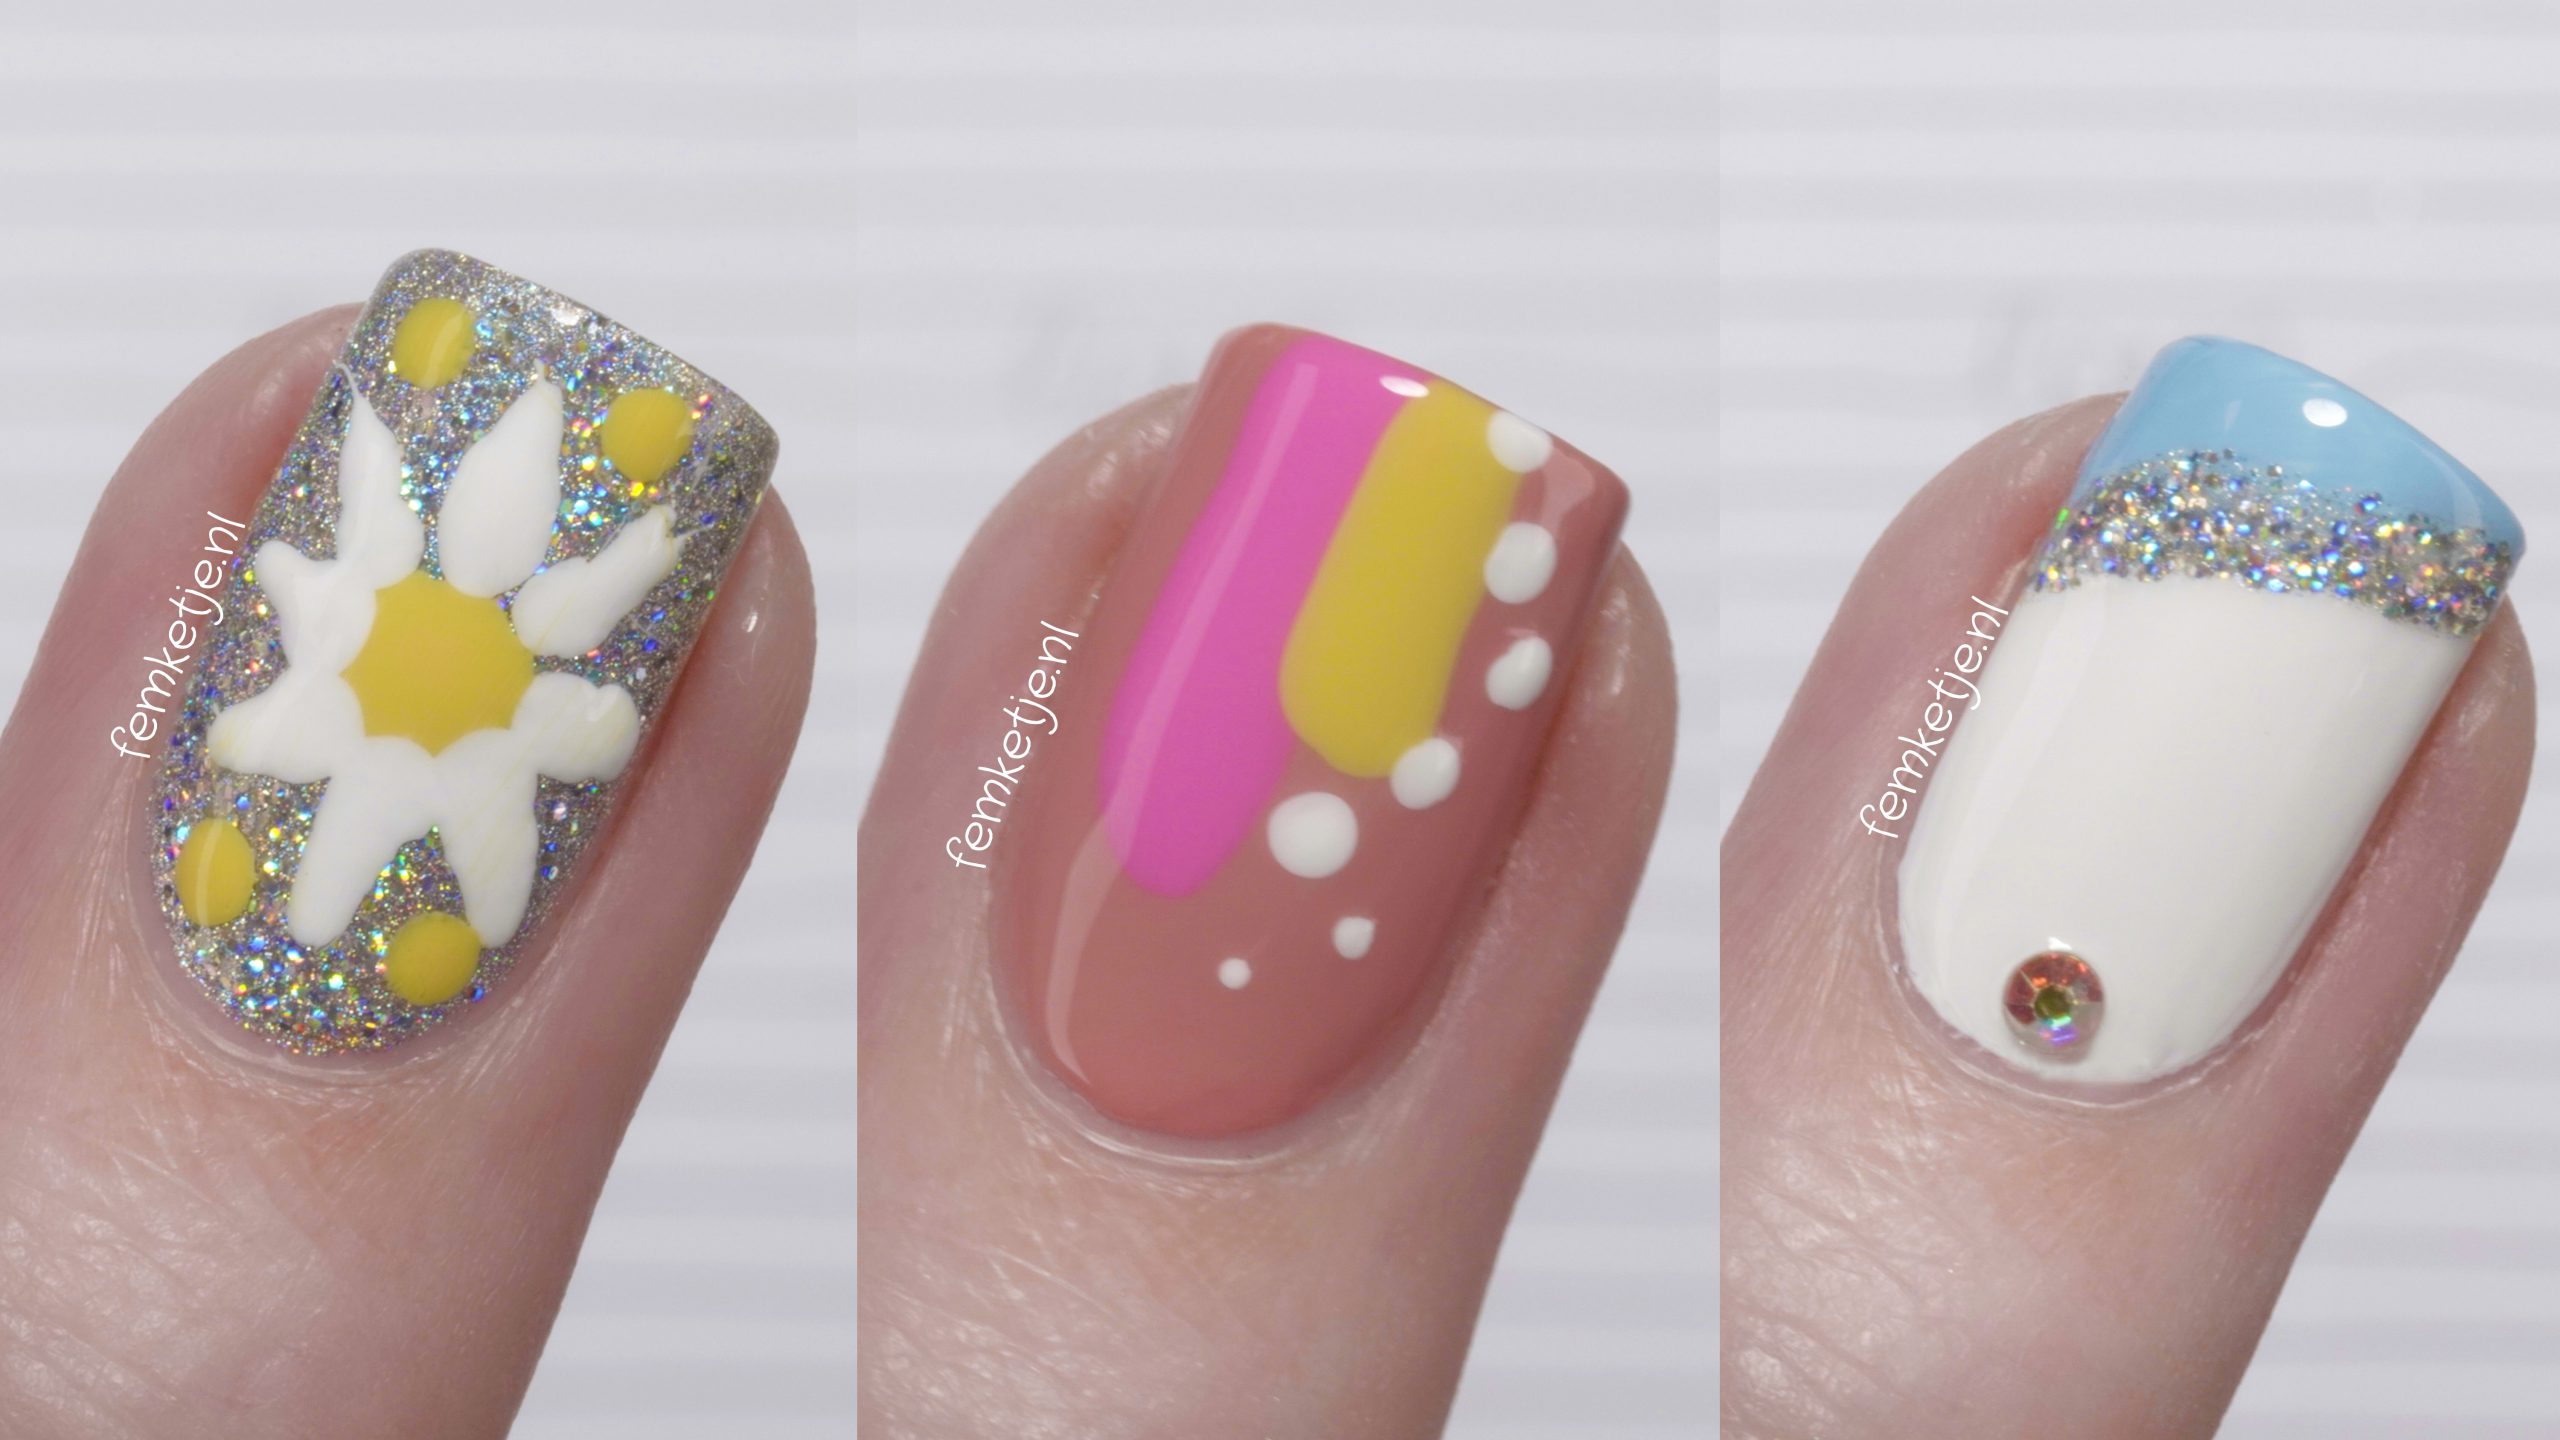 pretty nail designs tumblr